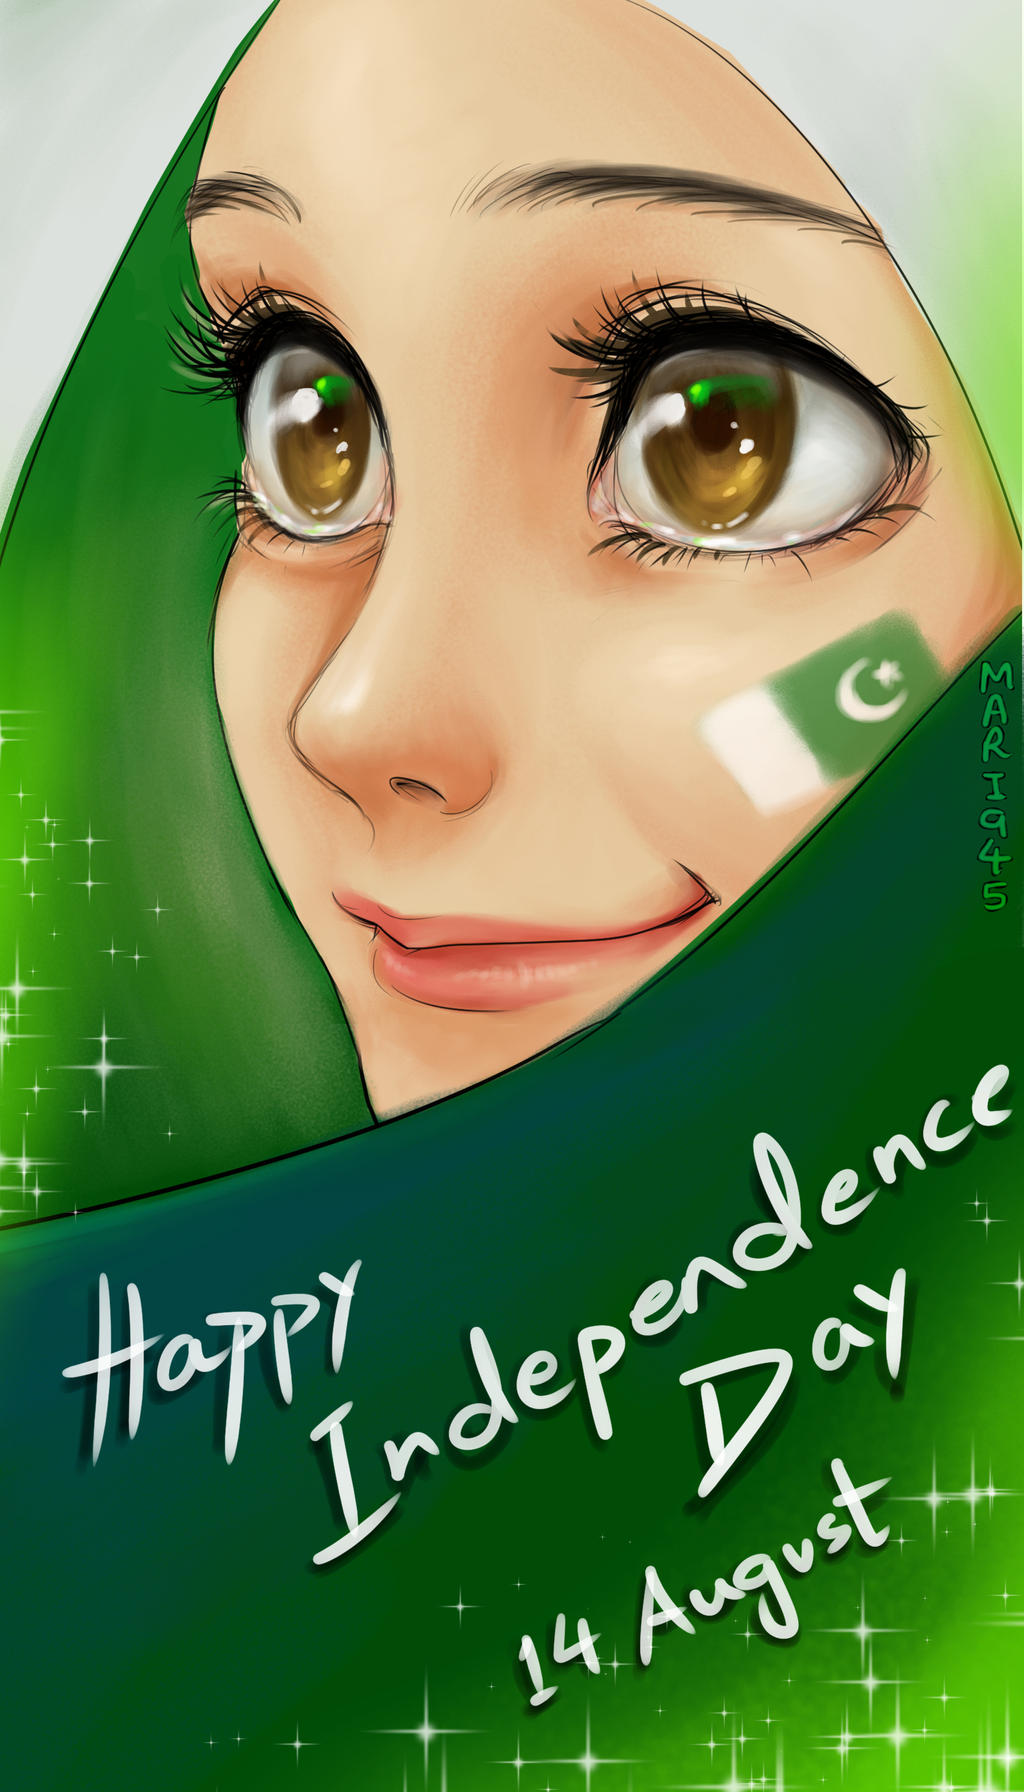 Pakistan Independence Day by Mari945 on DeviantArt